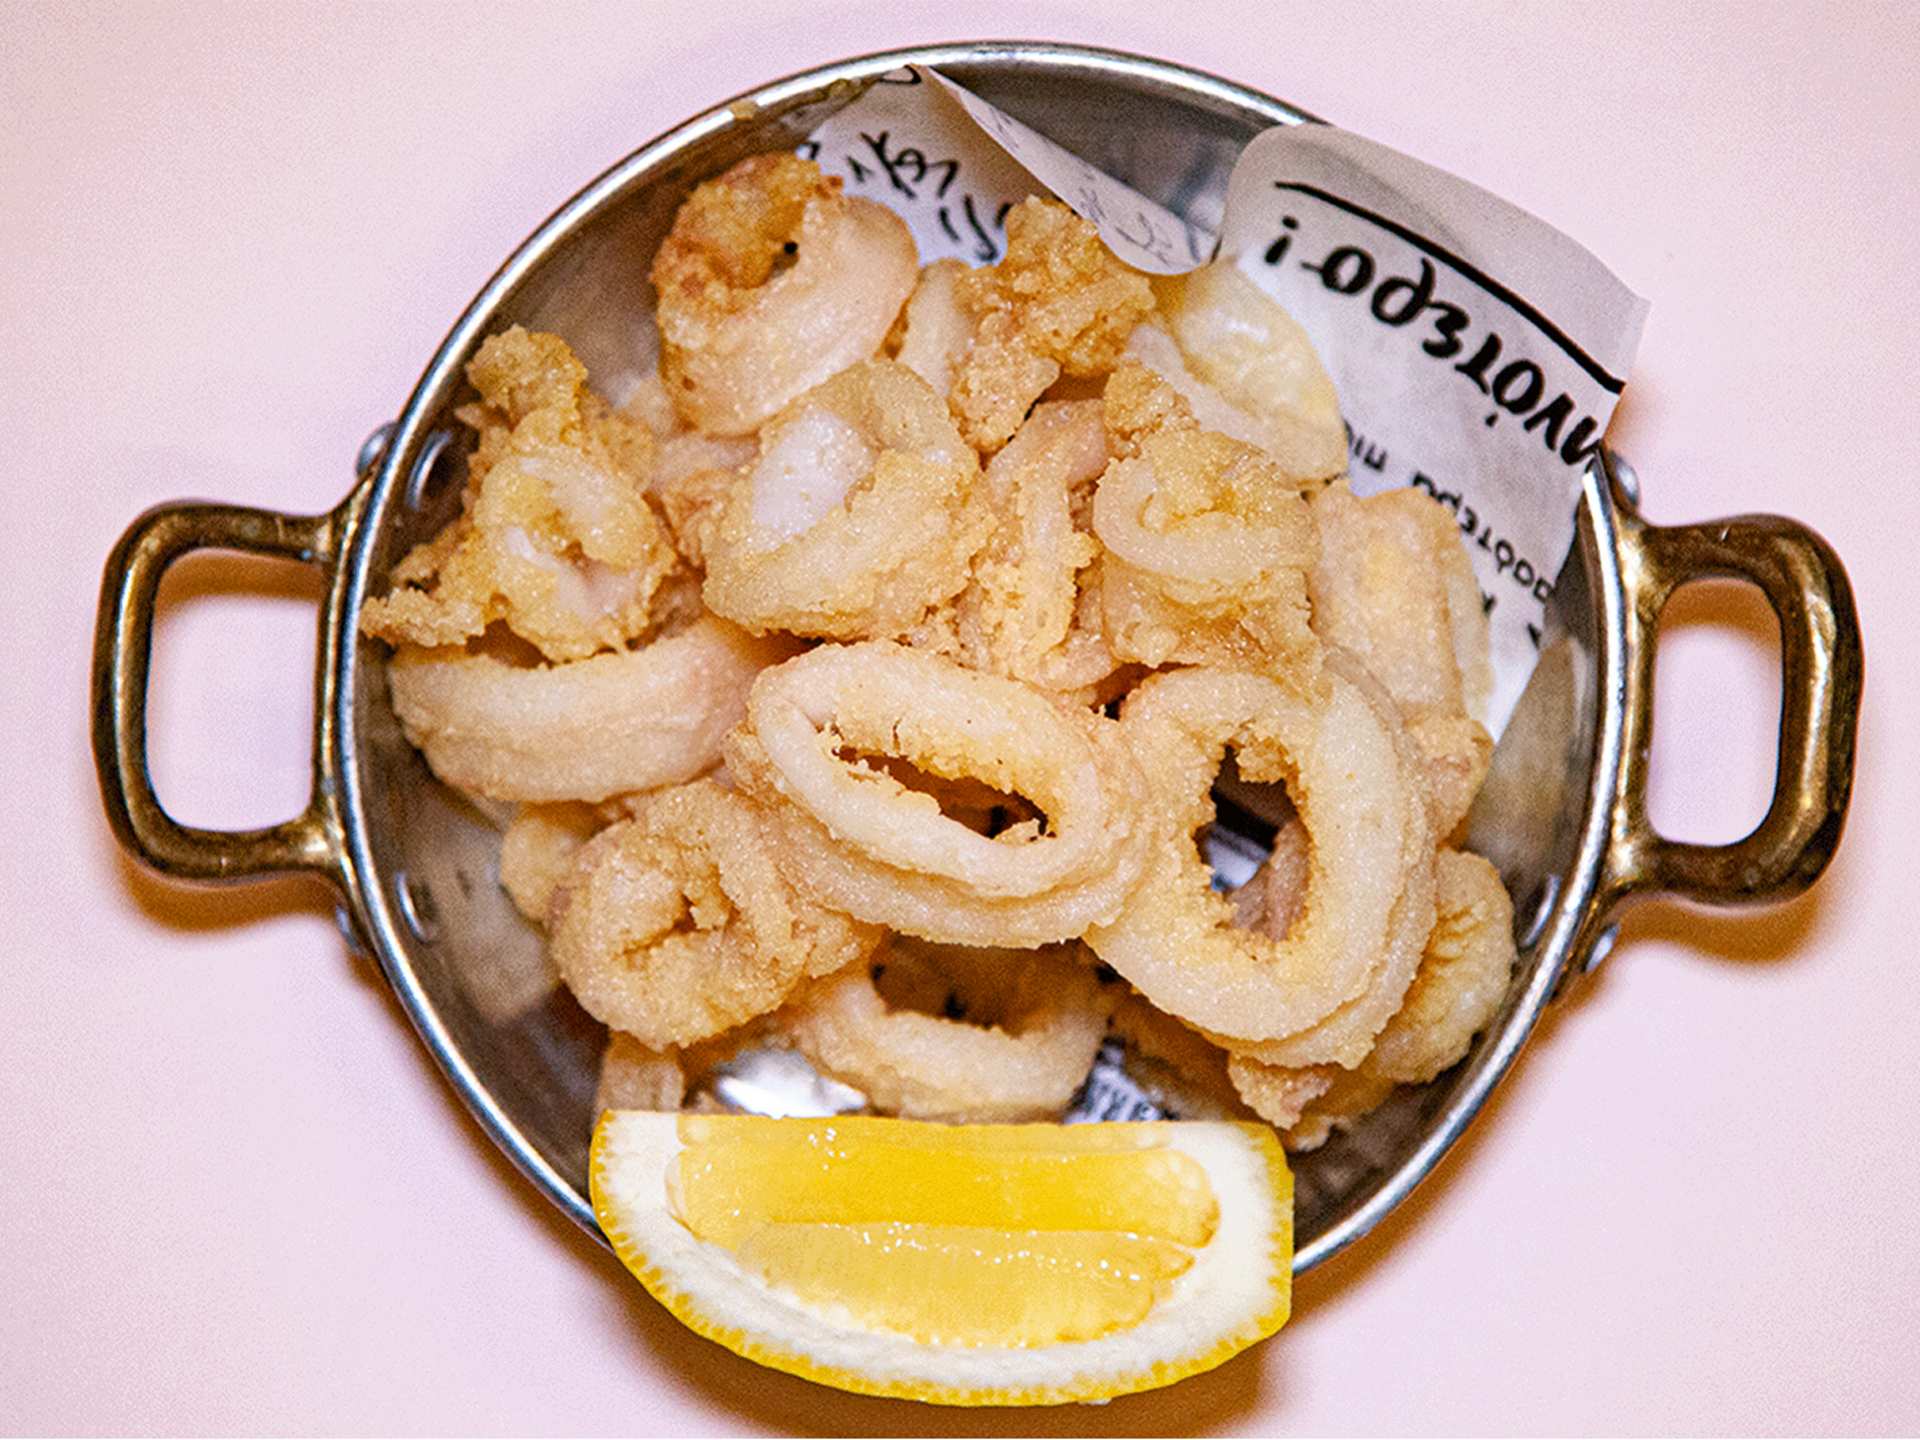 Best restaurants on Ossington | Bar Koukla calamari